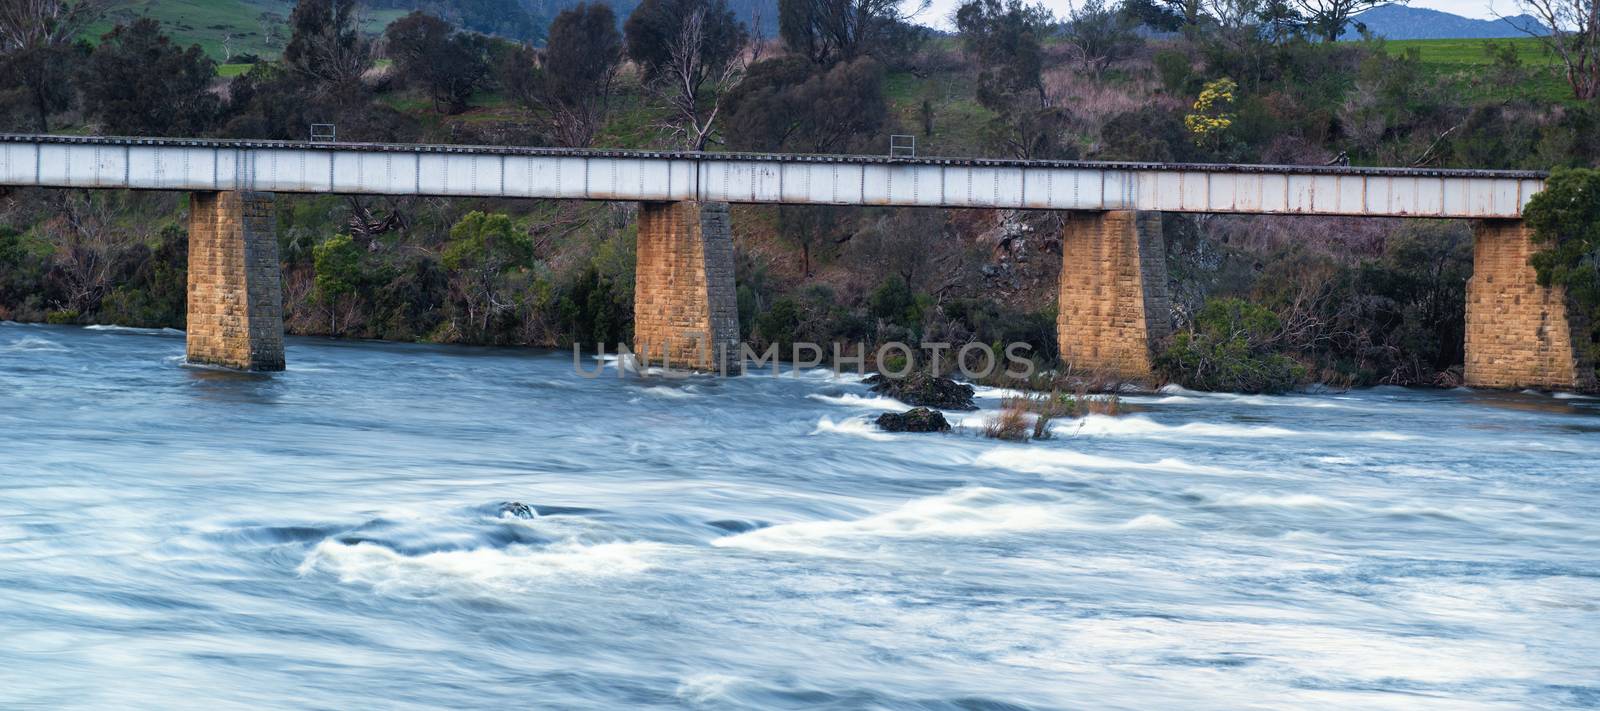 Country bridge and river in Tasmania by artistrobd